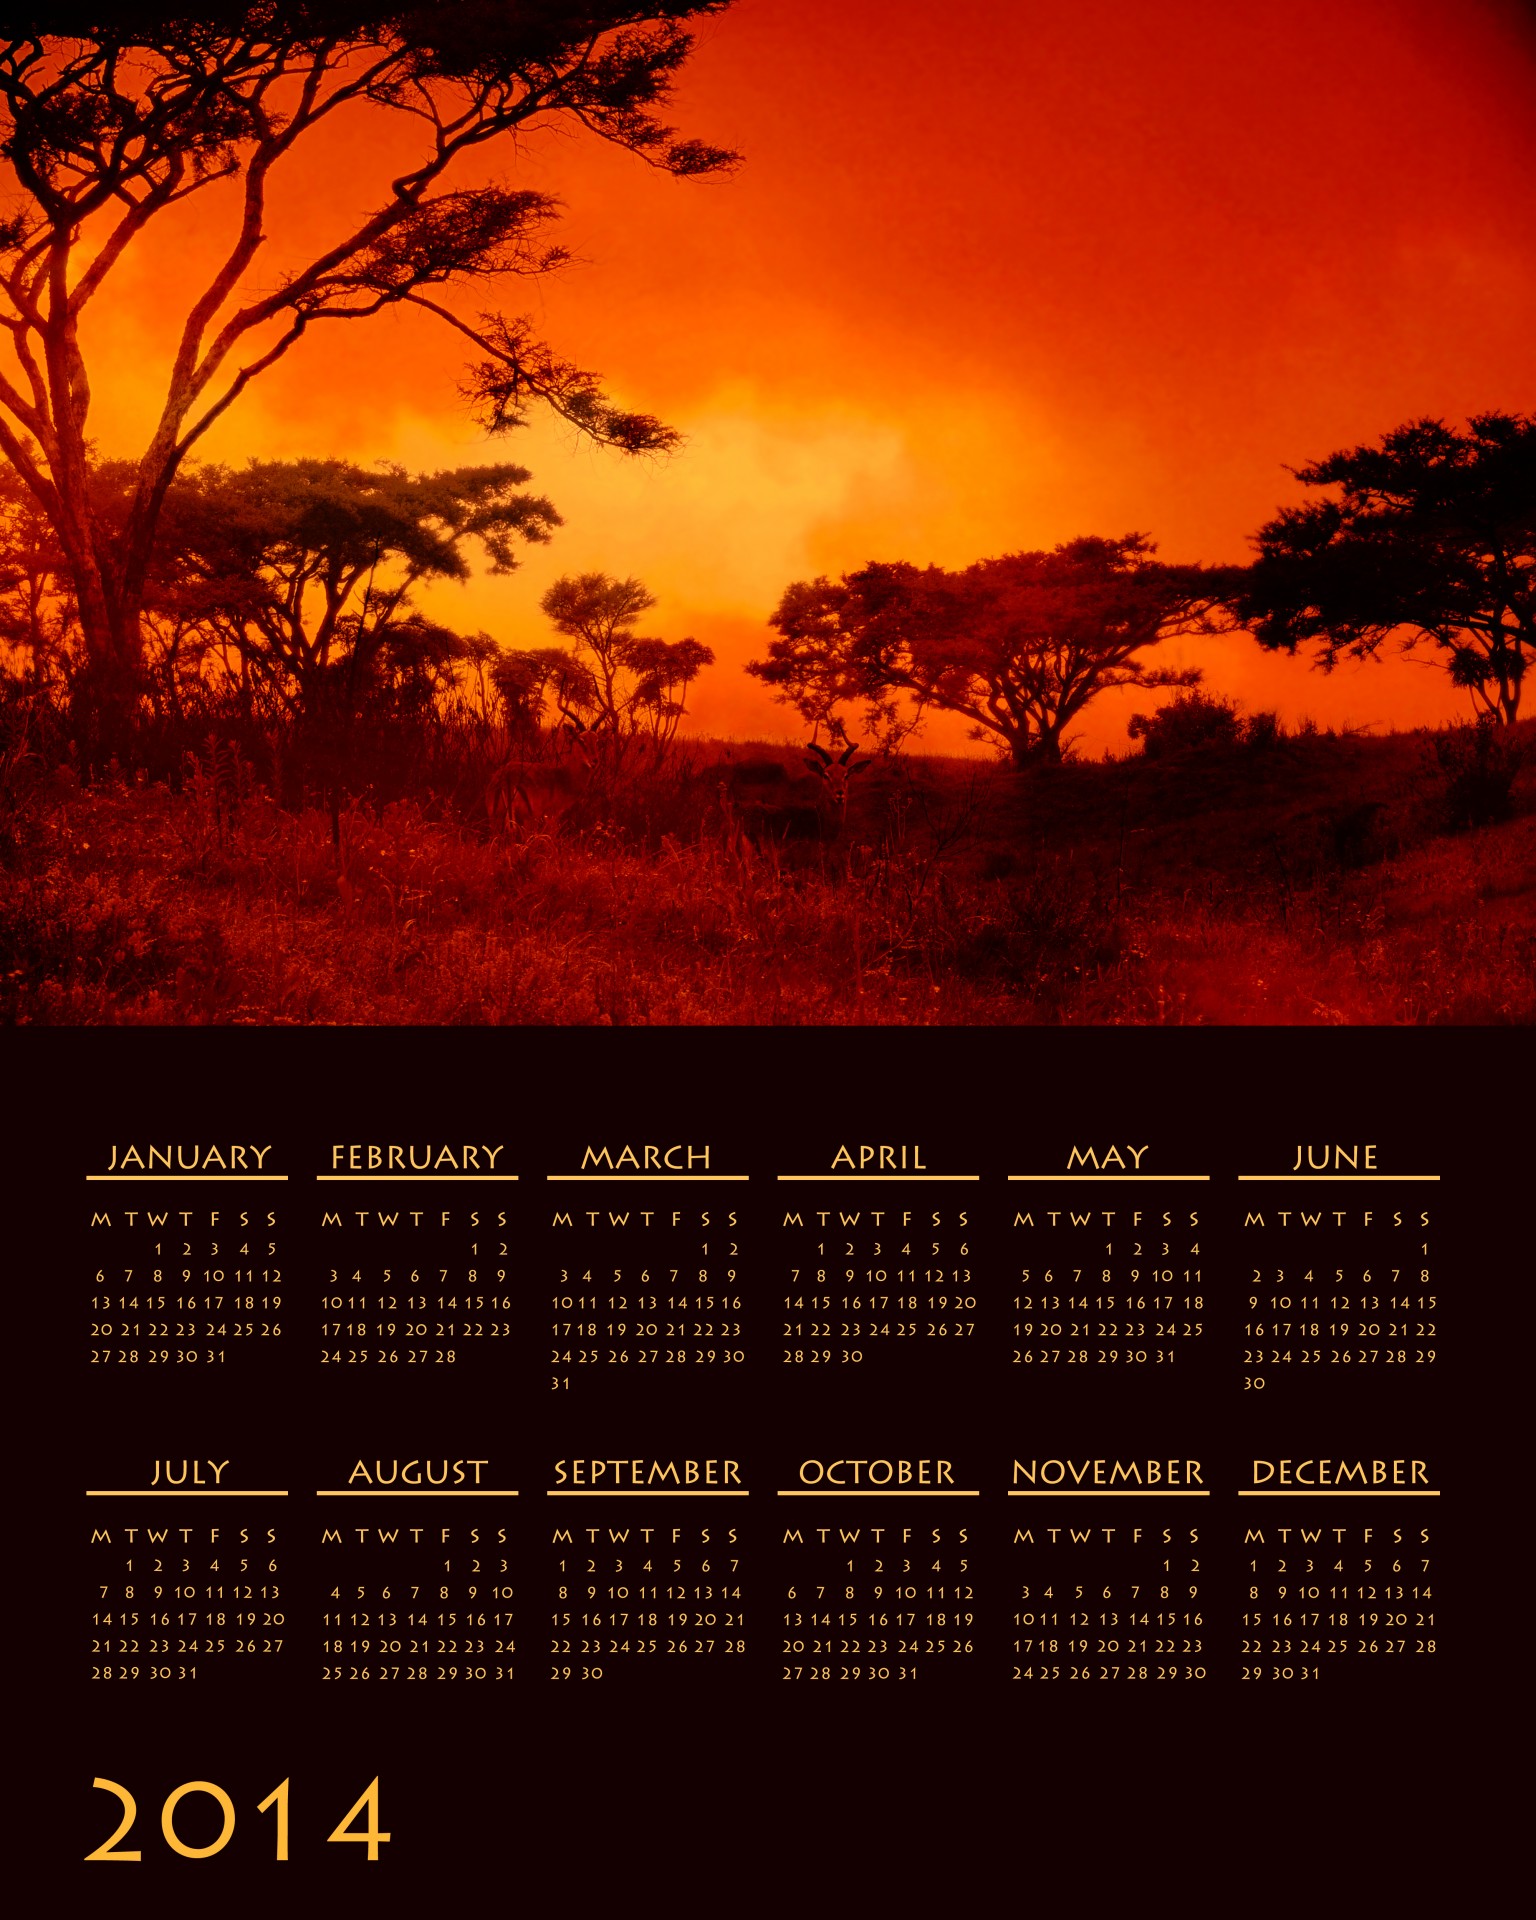 2014 calendar with black background